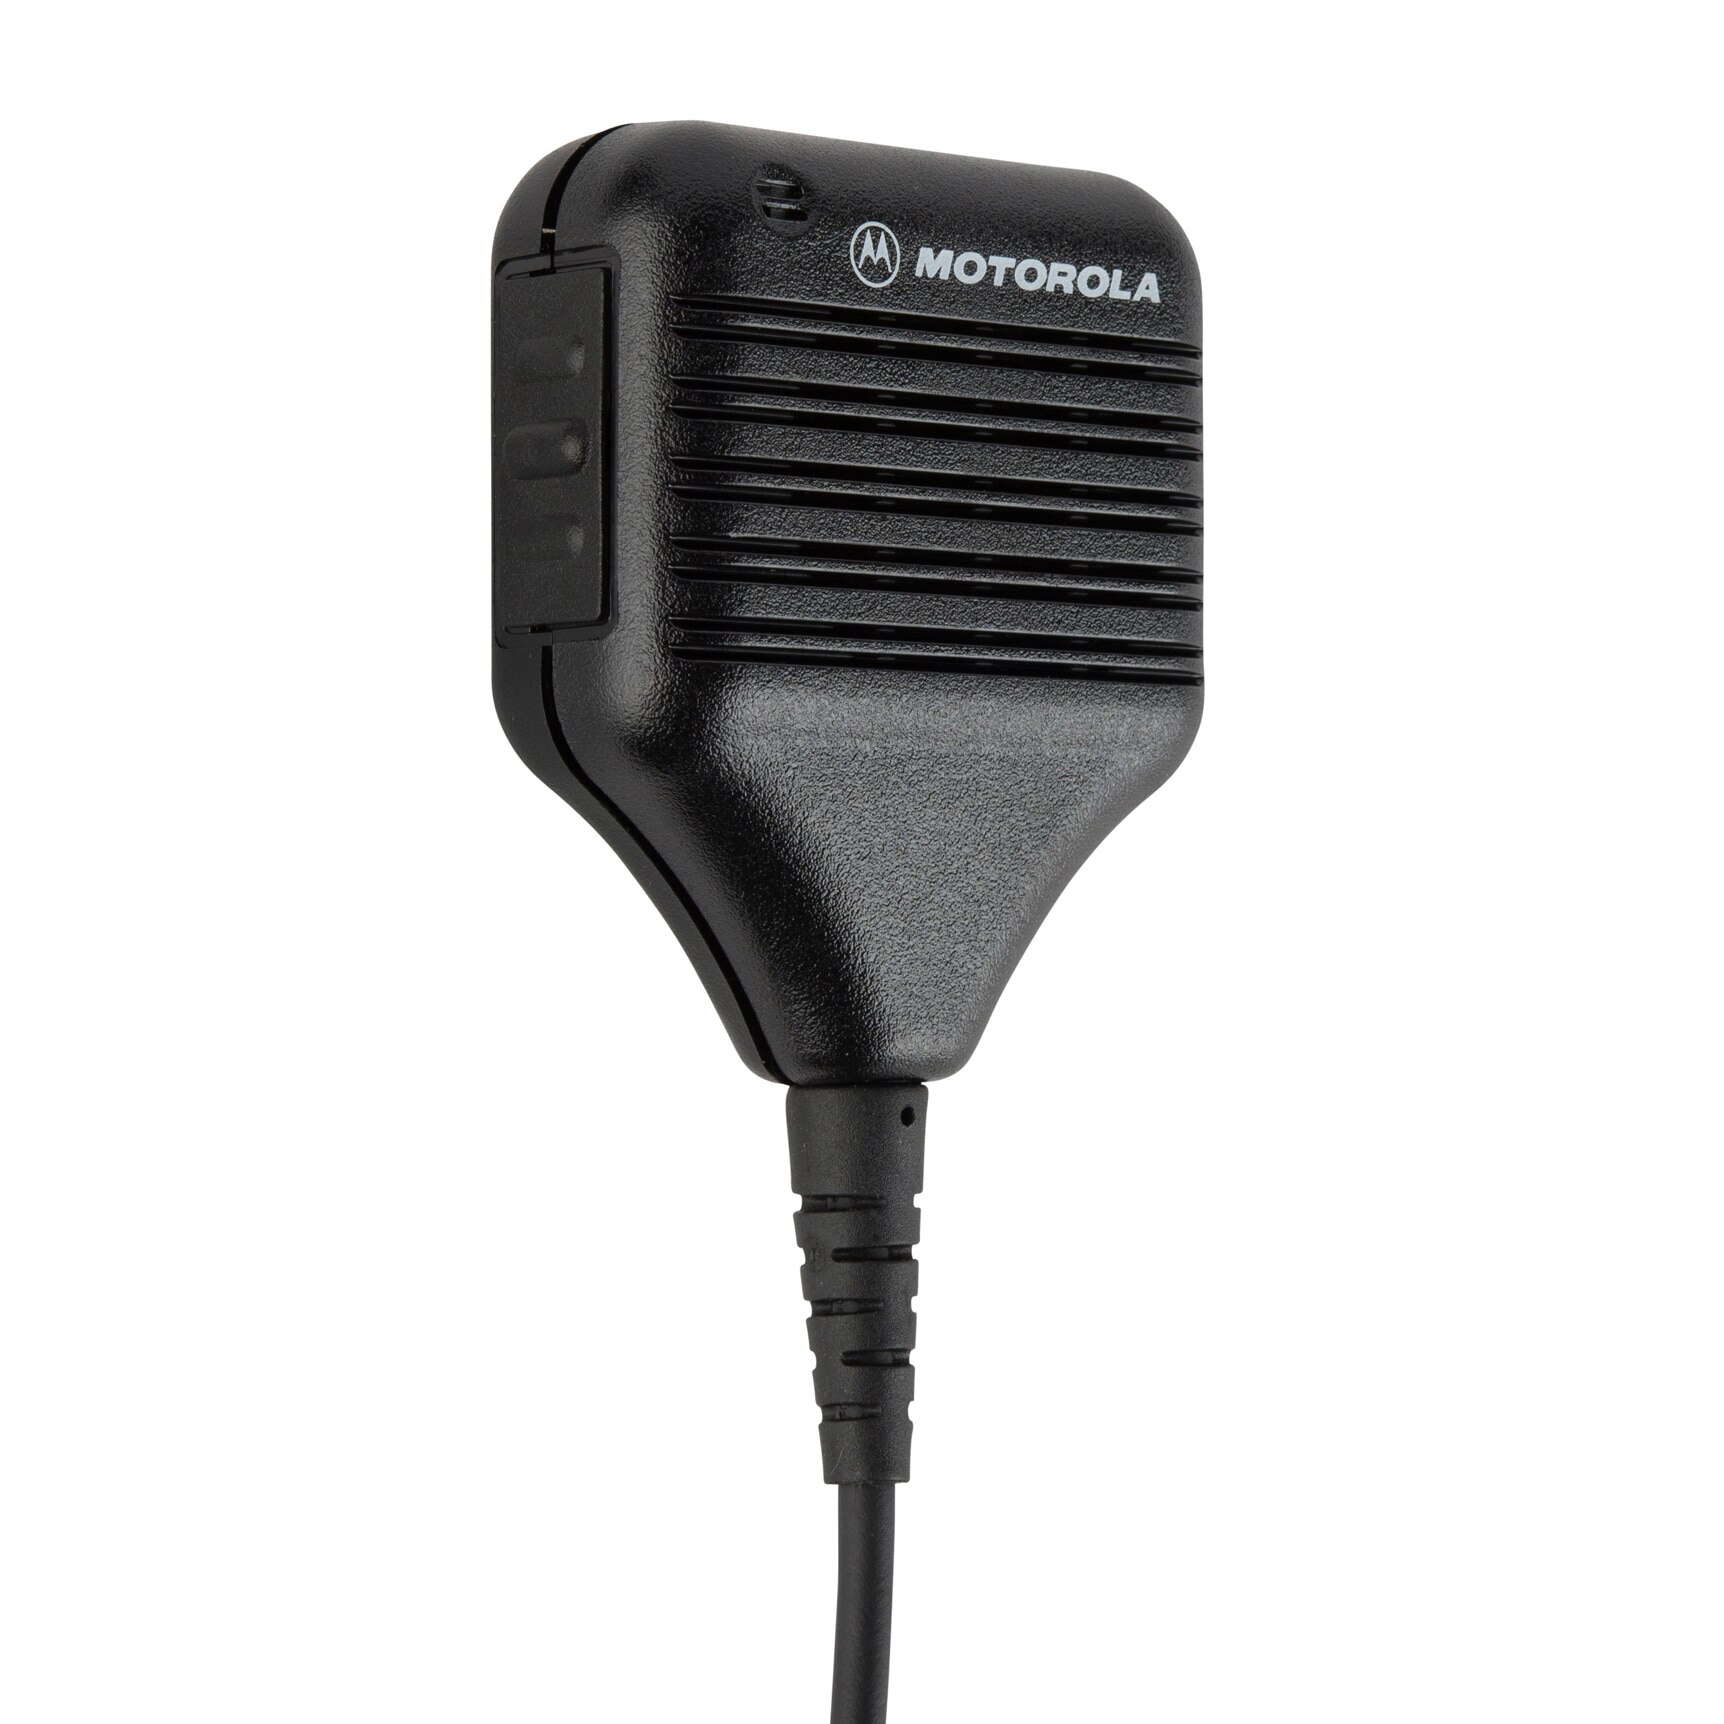 PMMN4013 Speaker Microphone For Motorola RDU2020 RDU4100 GP3688 Portable 